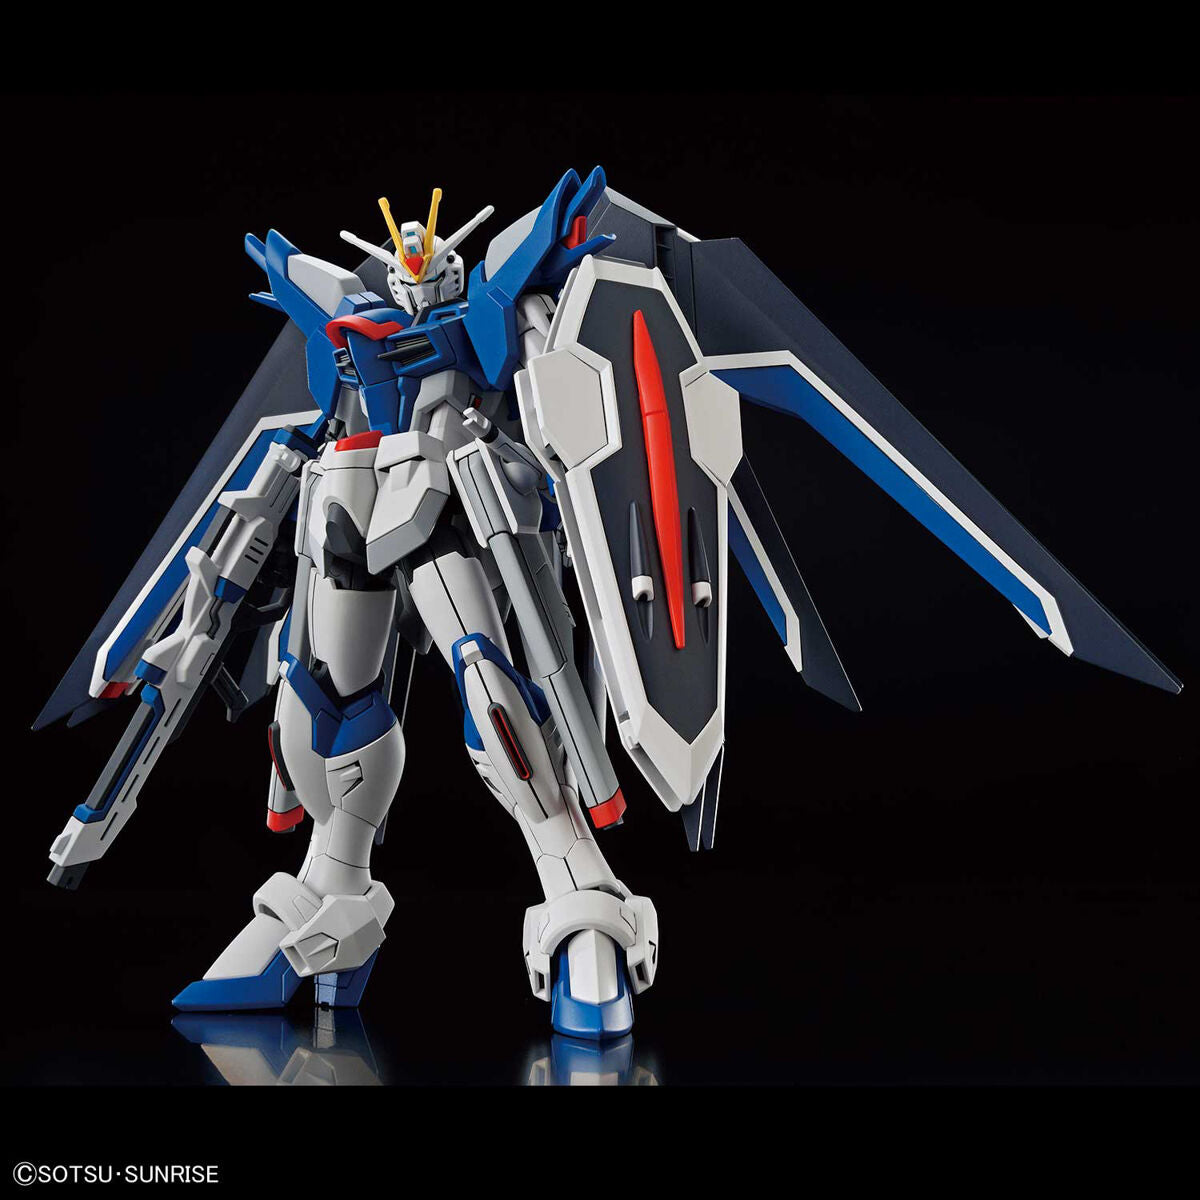 HG Mobile Suit GundamSEED FREEDOM Rising Freedom Gundam 1/144